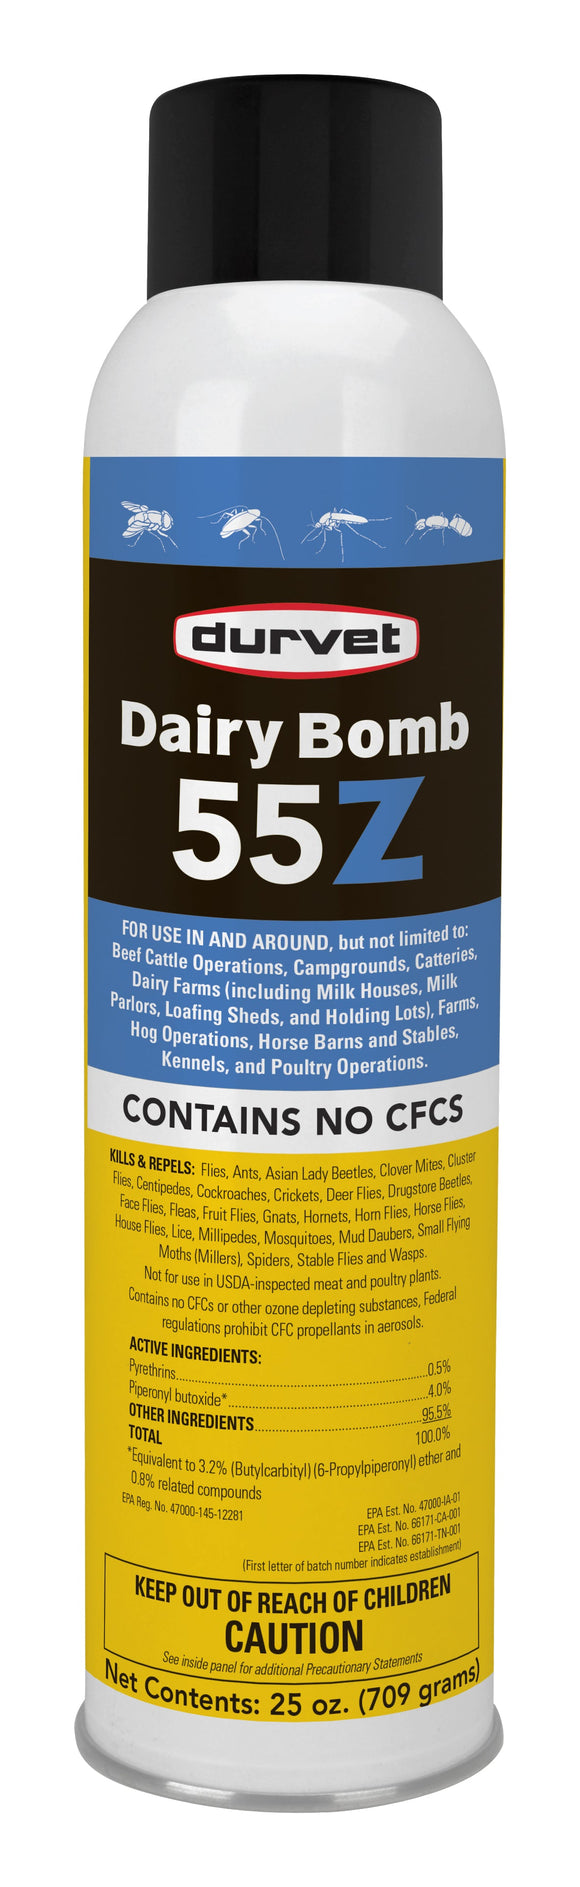 Durvet Dairy Bomb 55Z